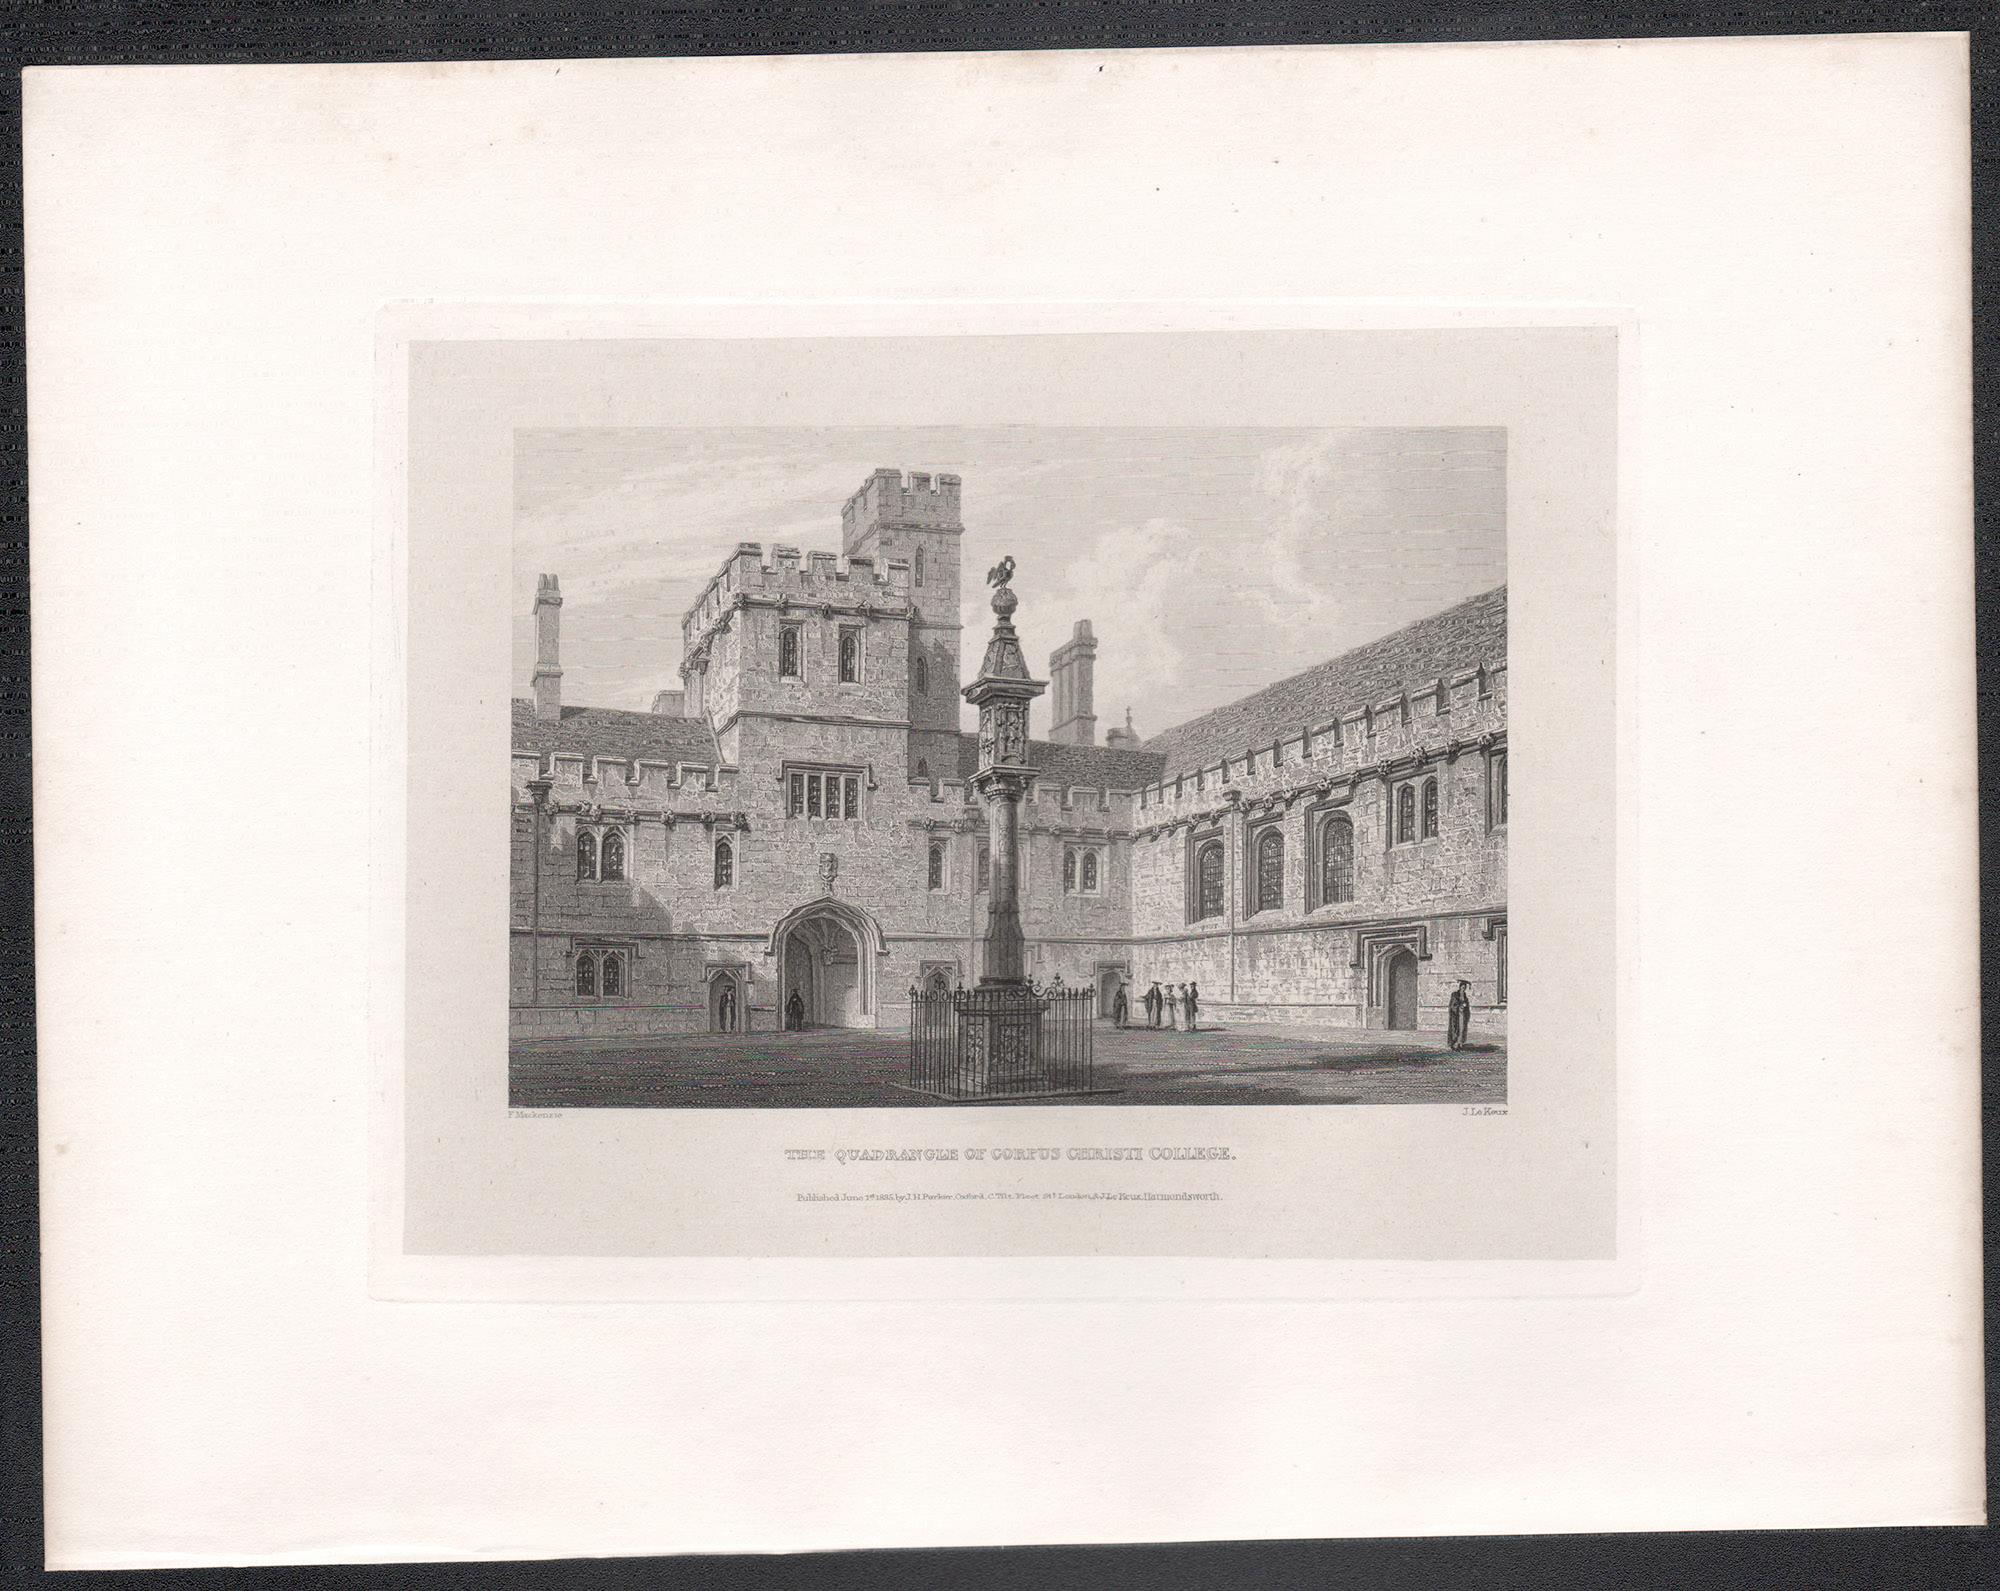 Quadrangle of Corpus Christi College. Oxford University. Antique C19th engraving - Print by John Le Keux after Frederick Mackenzie